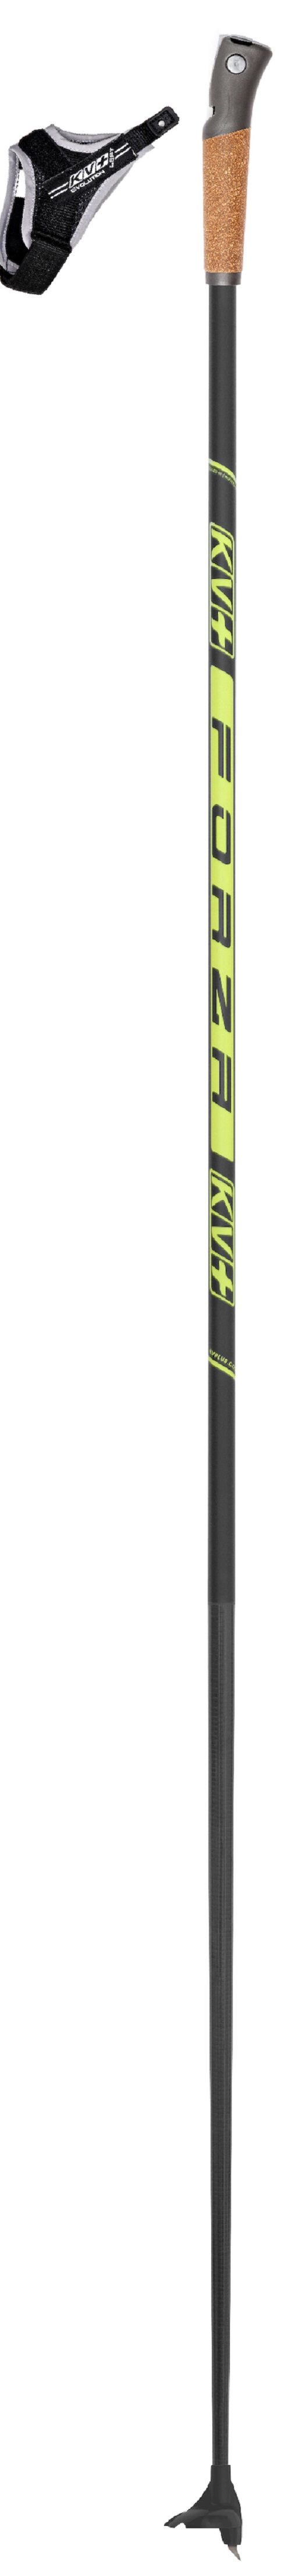 Лыжные палки KV+ Forza Clip cross country pole Yellow, 22P016Y 180